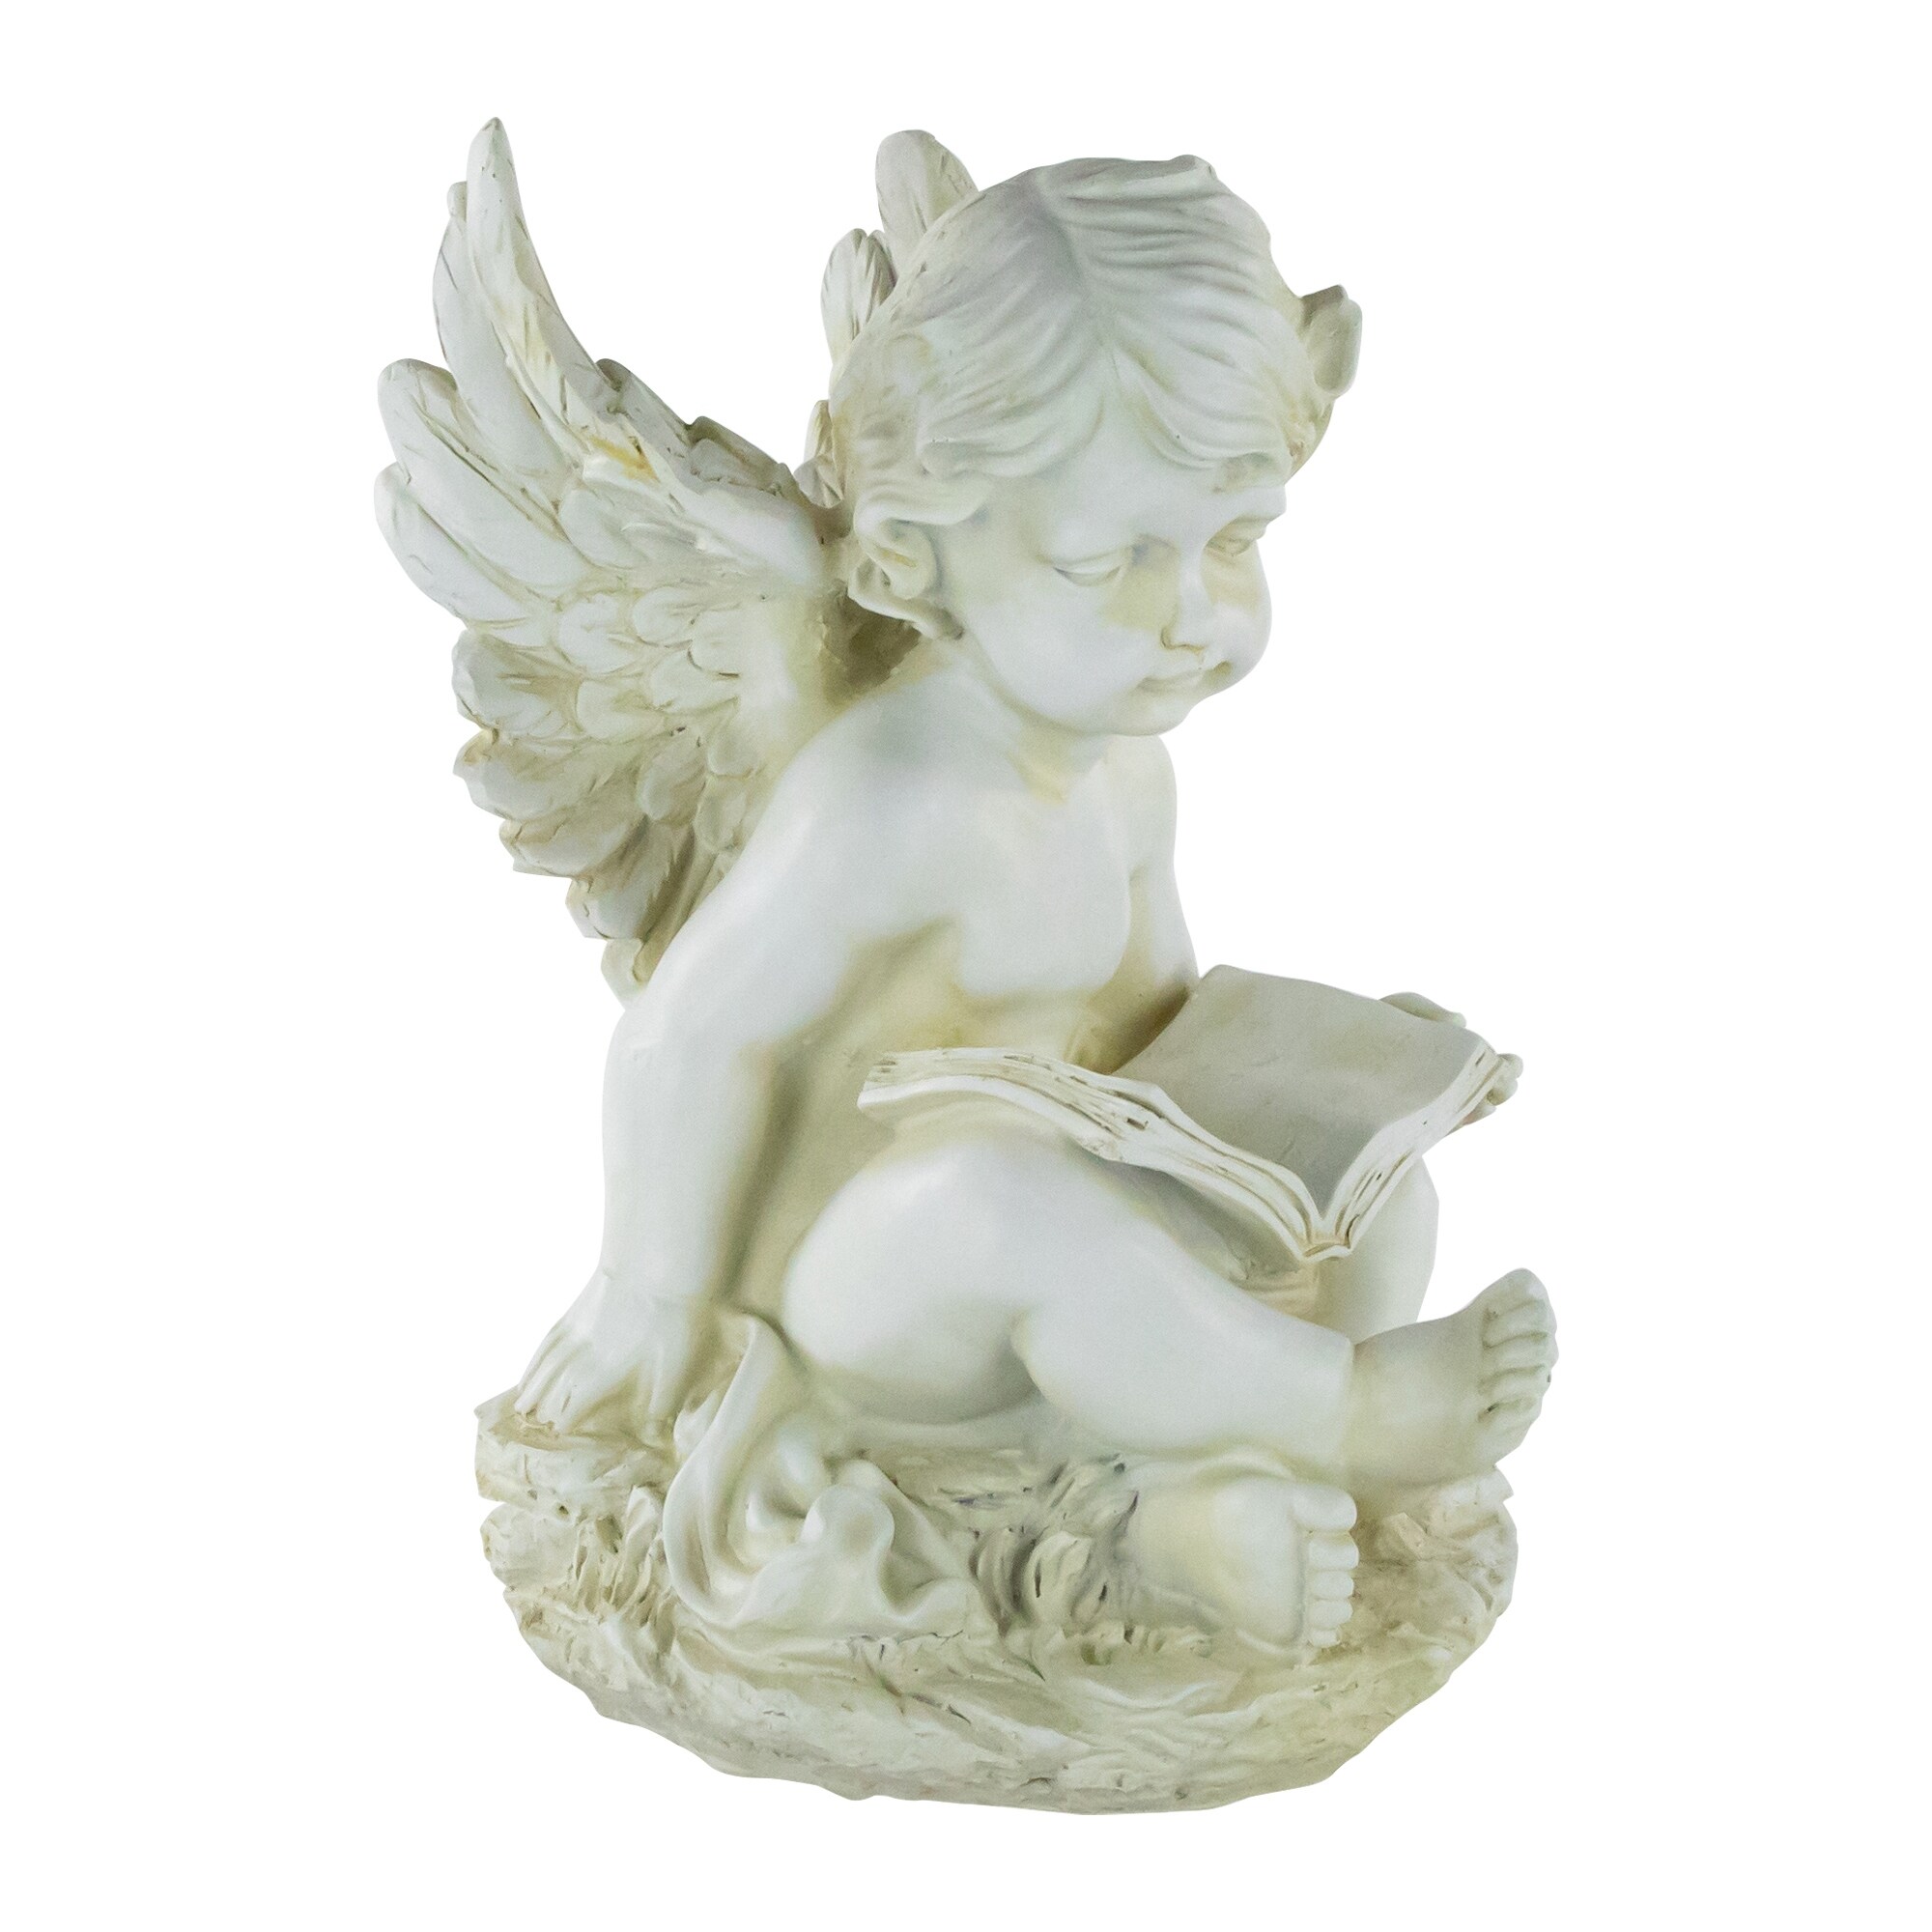 11.5" Ivory Sitting Cherub Angel with Book Outdoor Patio Garden Statue - image 2 of 4